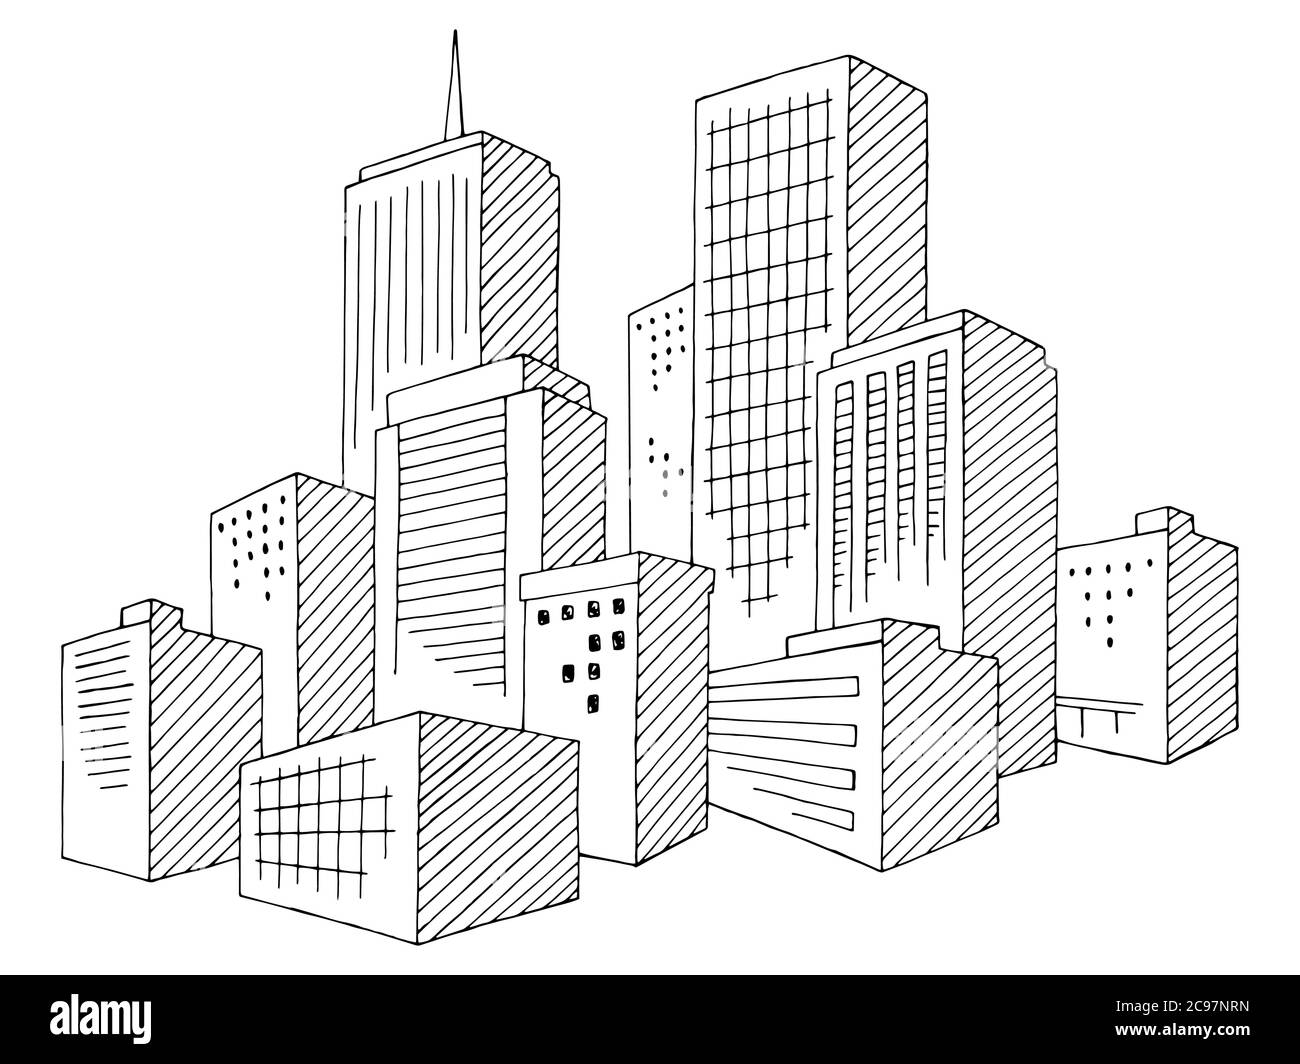 City Grafik schwarz weiß Stadtbild Skyline Skizze Illustration Vektor Stock Vektor